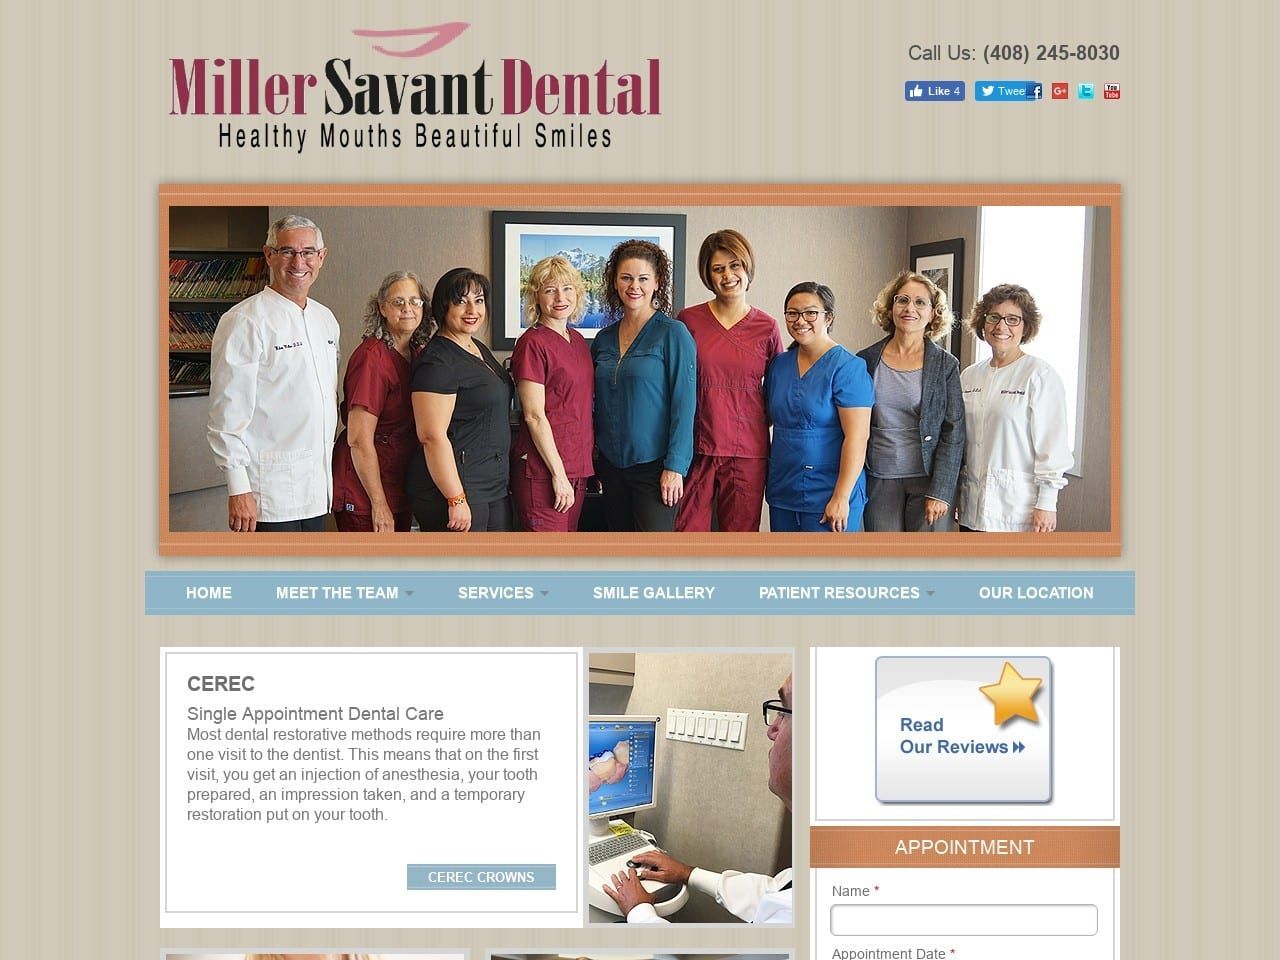 Millersavant Dental Website Screenshot from millersavantdental.com